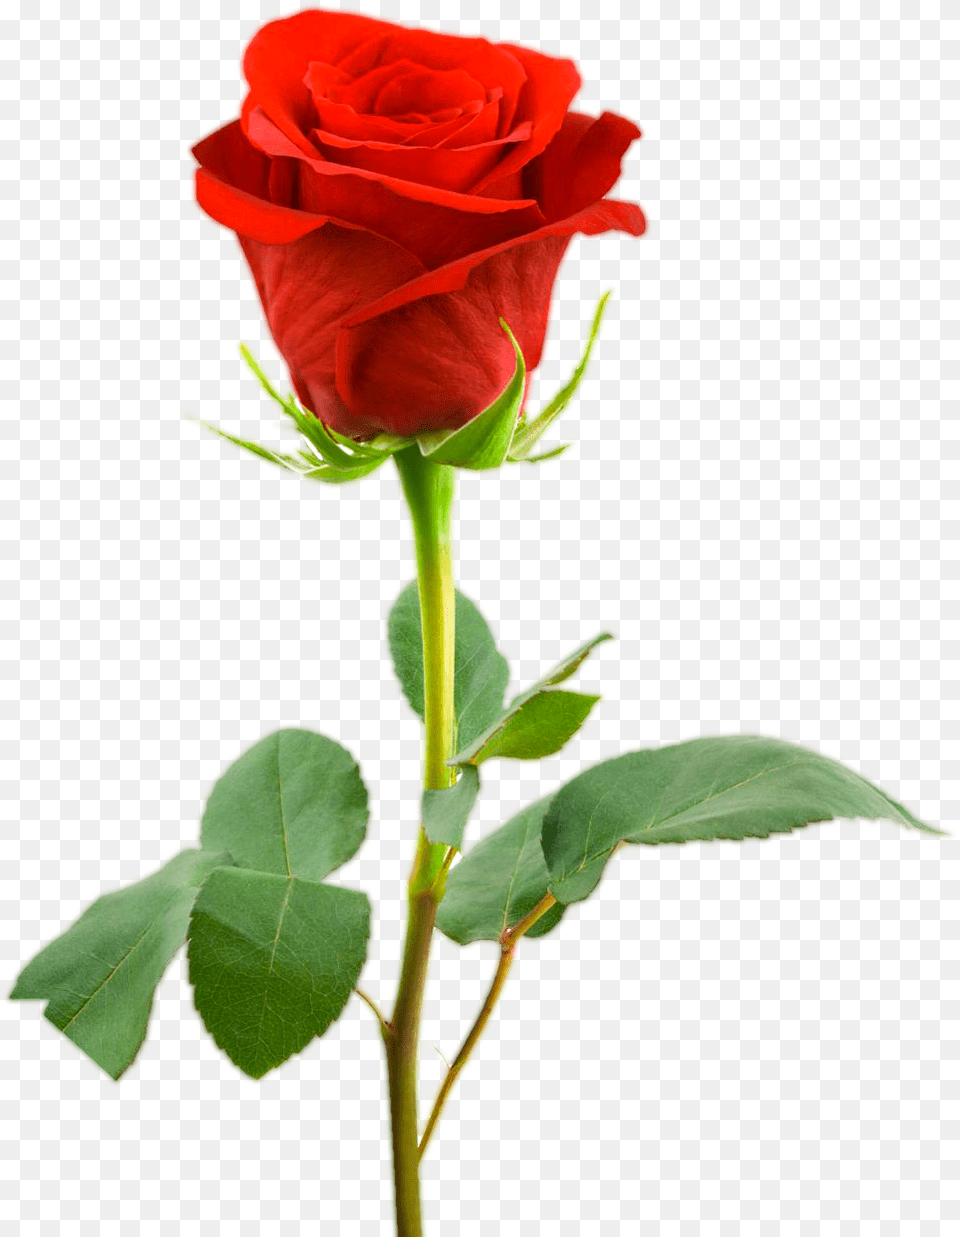 Love Red Rose Images Rose Images Full Hd, Flower, Plant Png Image